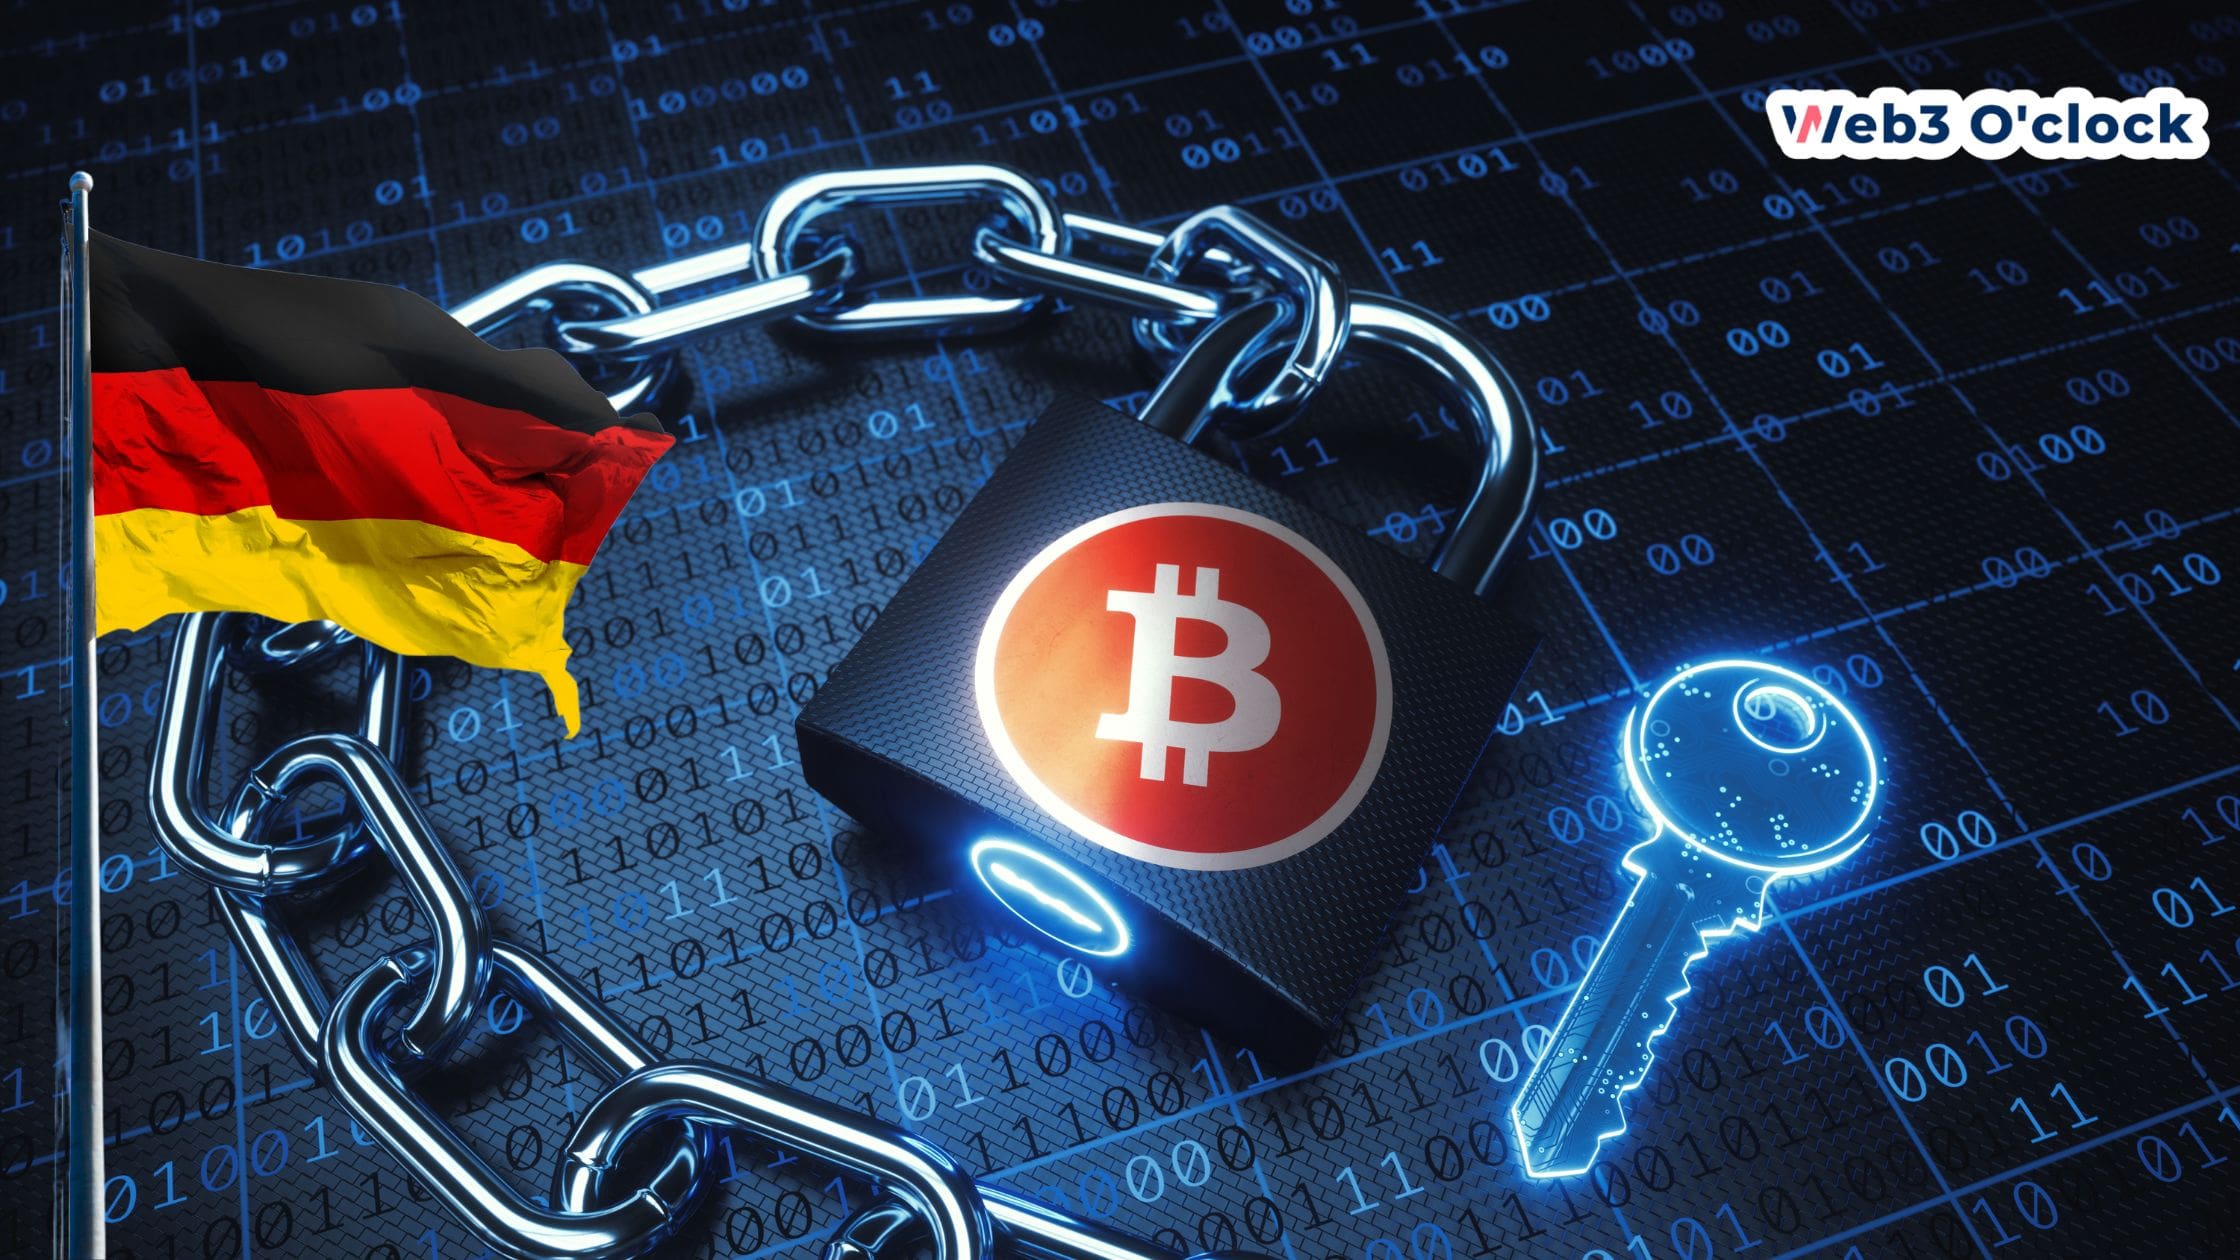 Germany's Blockchain Funding Rises by web3oclock